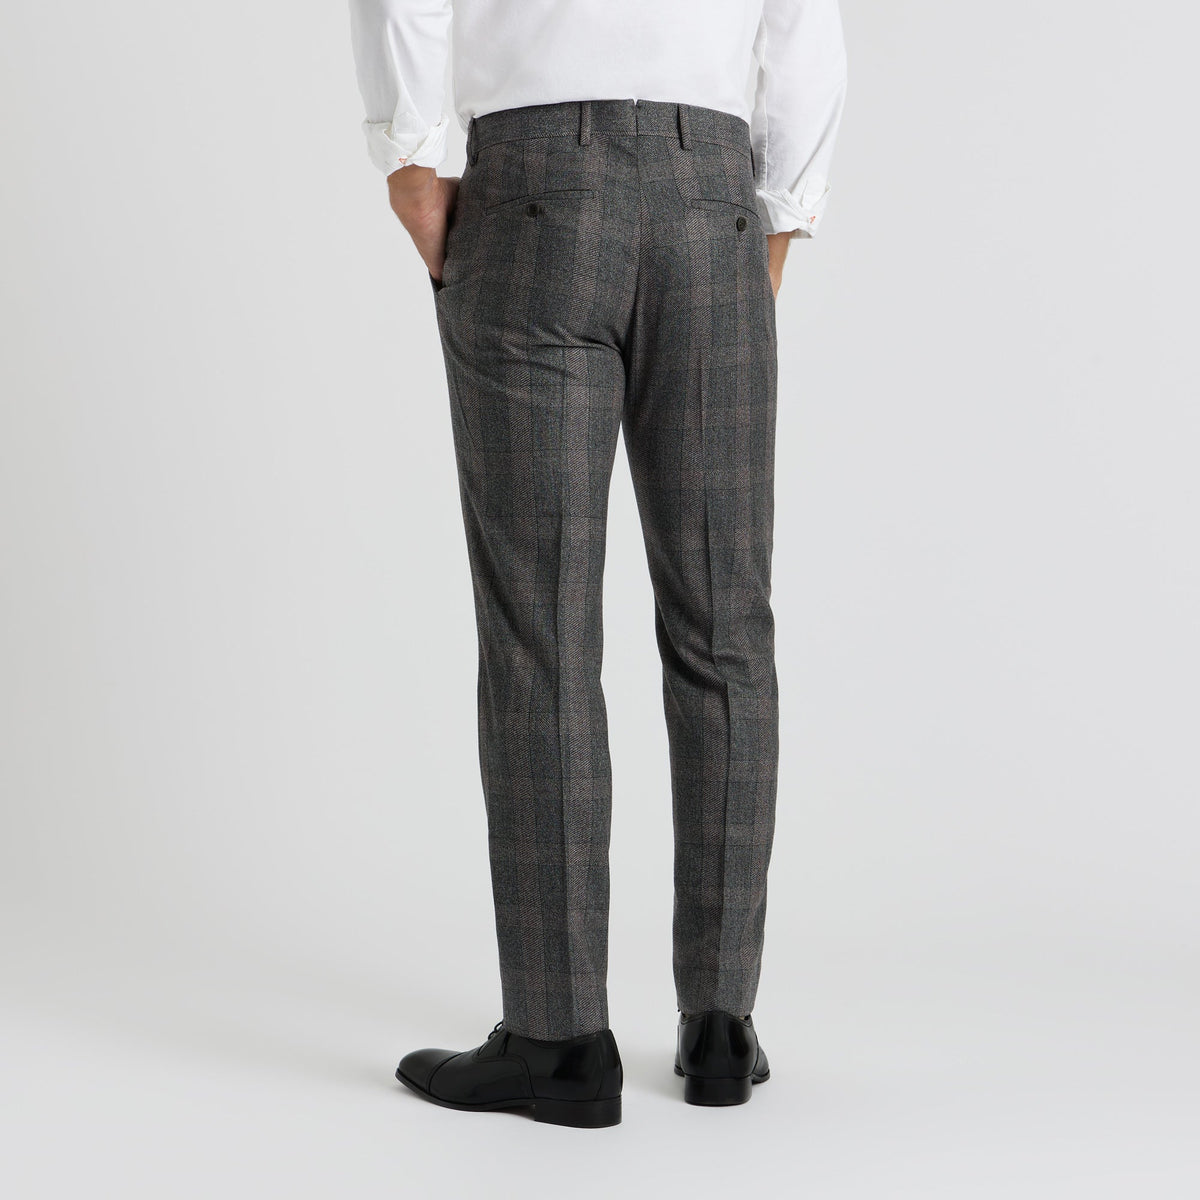 SPOKE Winter Smarts - Burgundy Grey Check Custom Fit Trousers - SPOKE